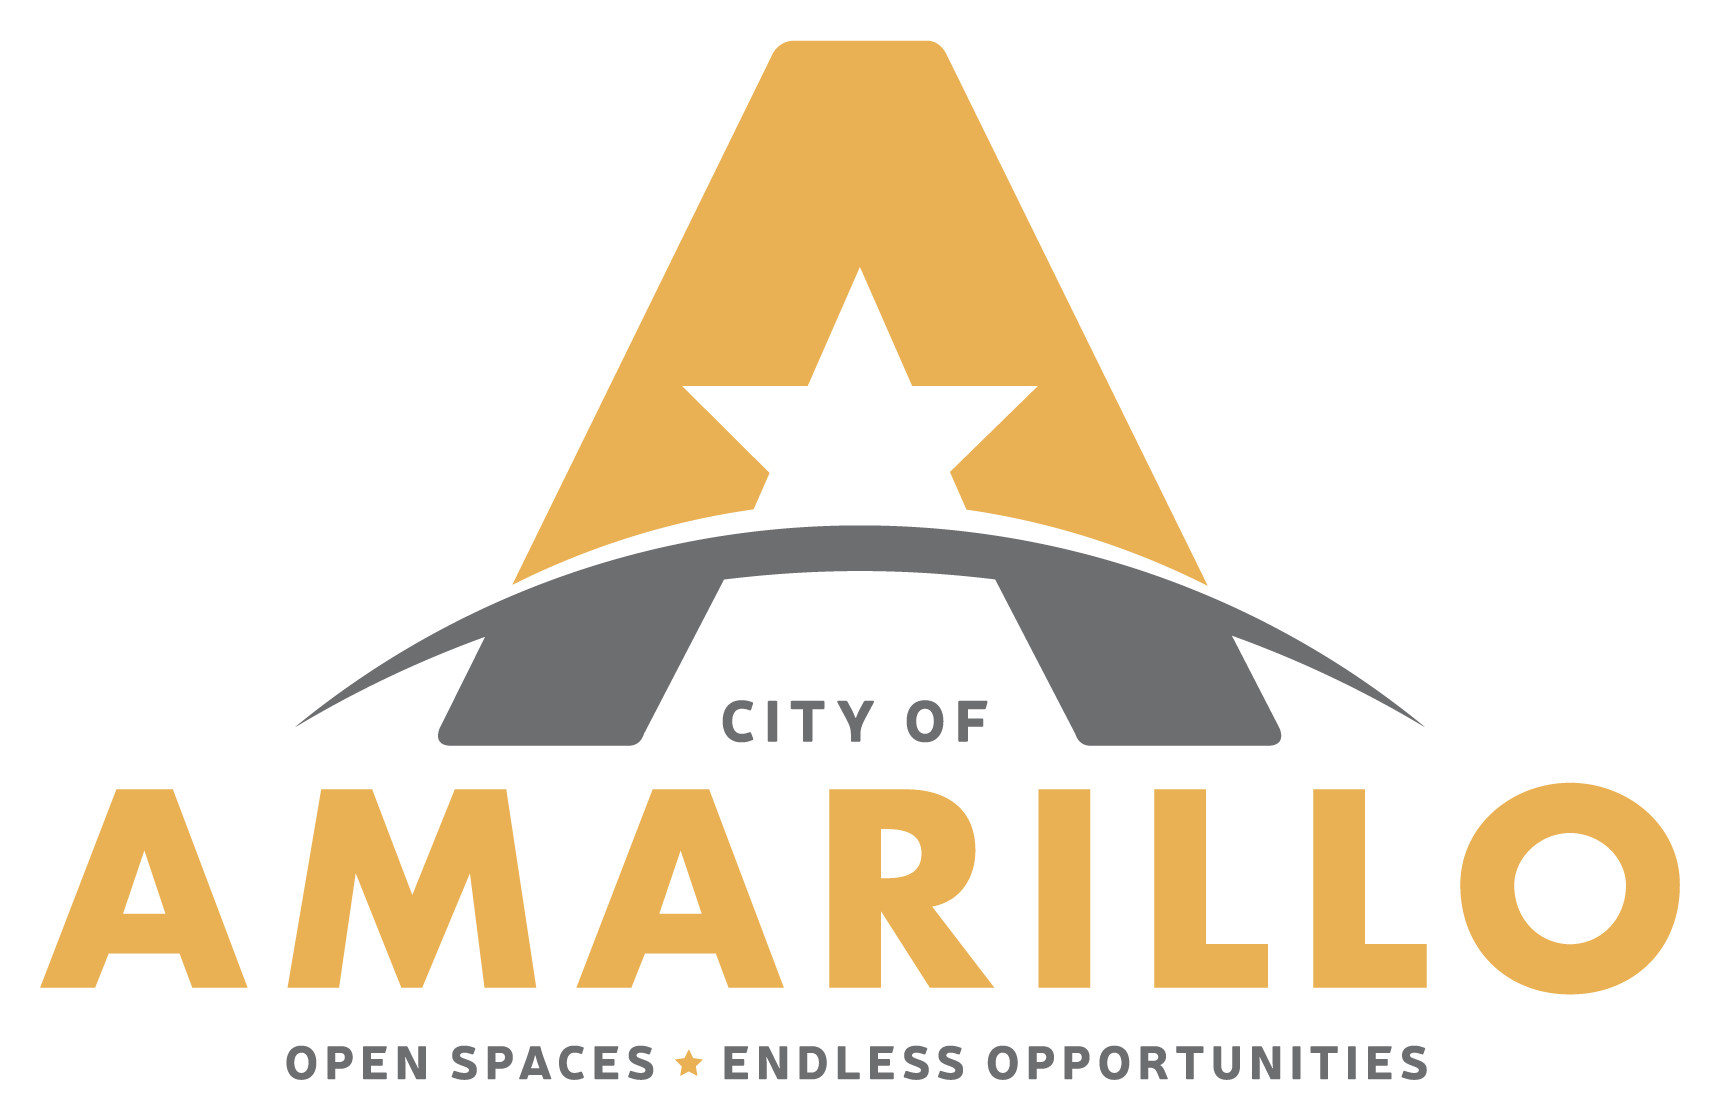 City of Amarillo logo